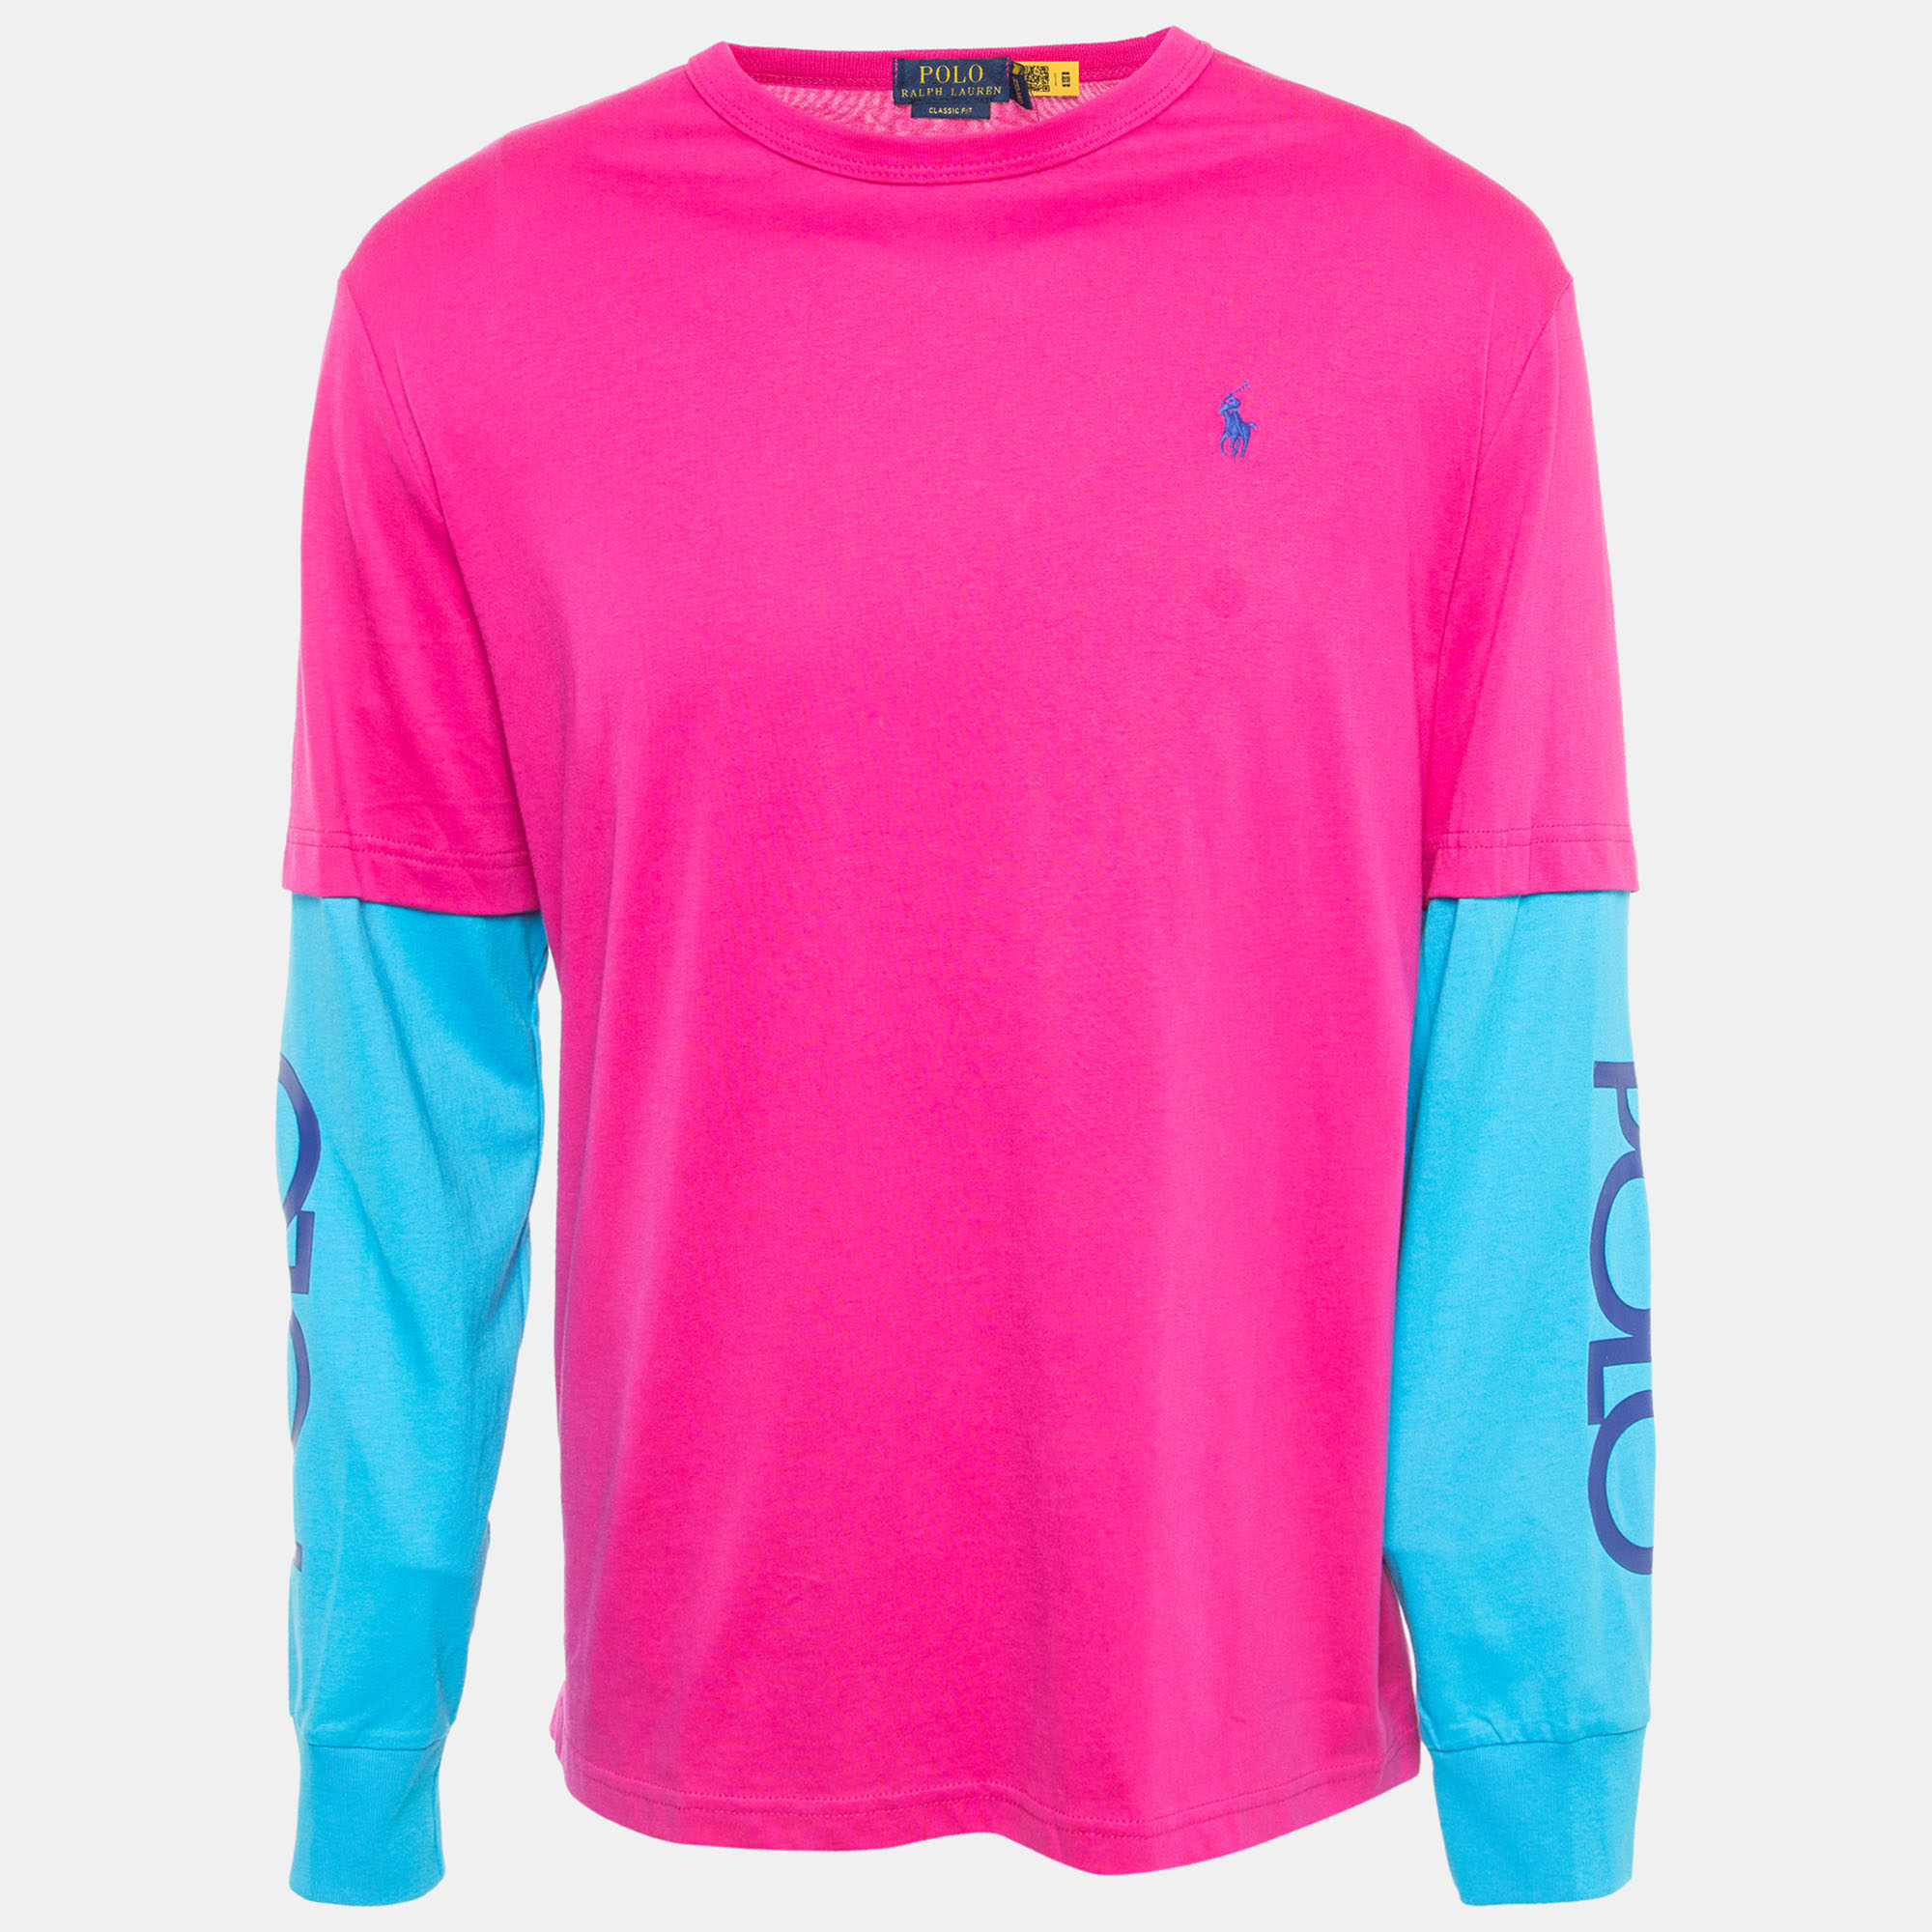 Polo ralph lauren pink/blue cotton classic fit long sleeve t-shirt m